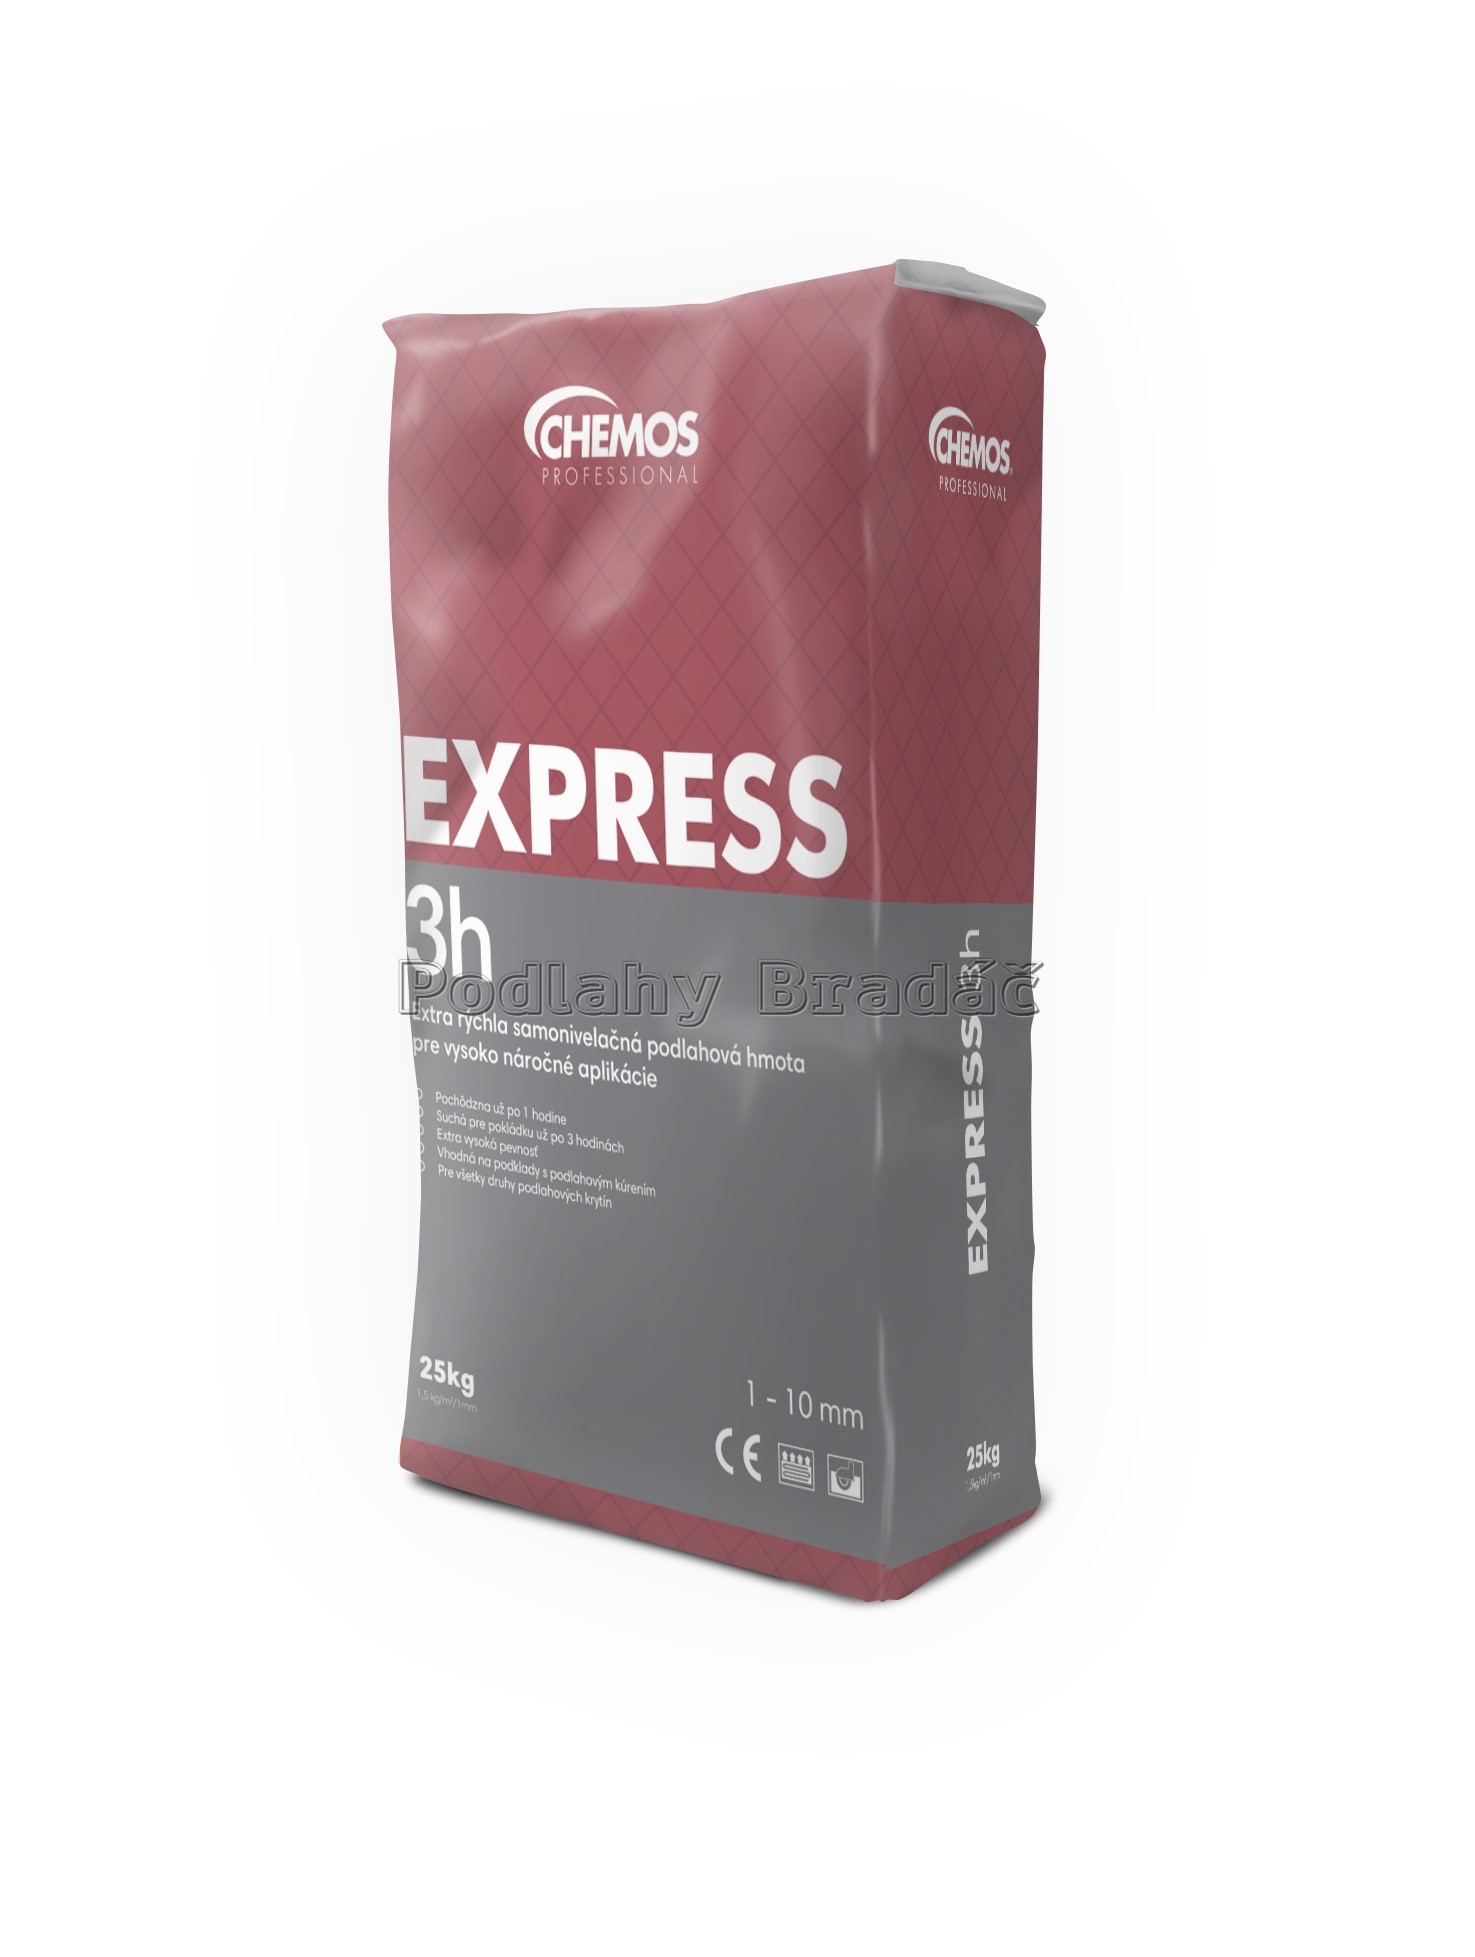 Chemos Express 3H 25kg